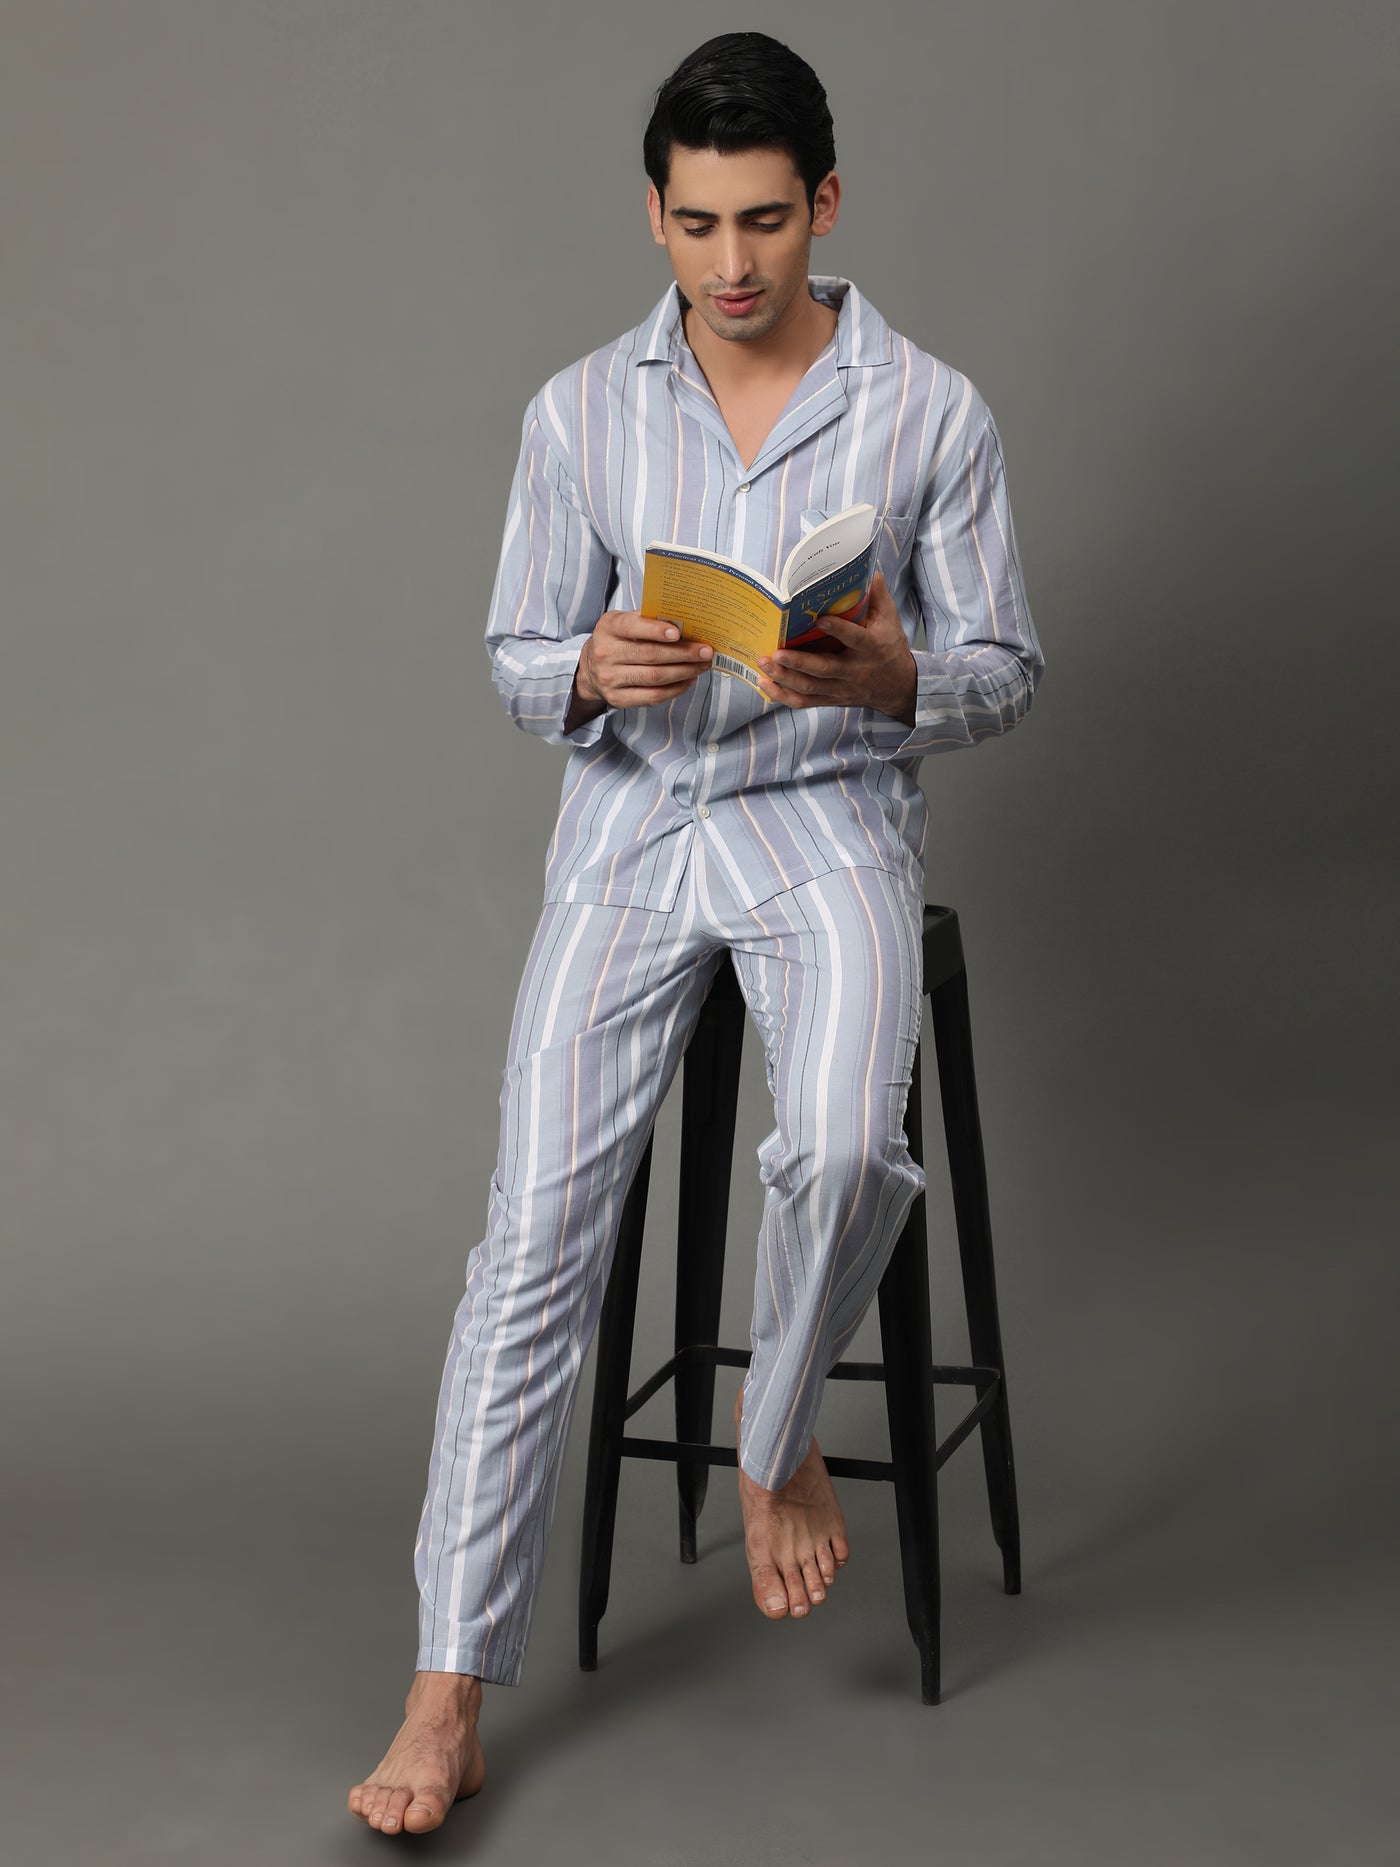 Pyjama Set for Men-Grey Stripes with Gold Lurex